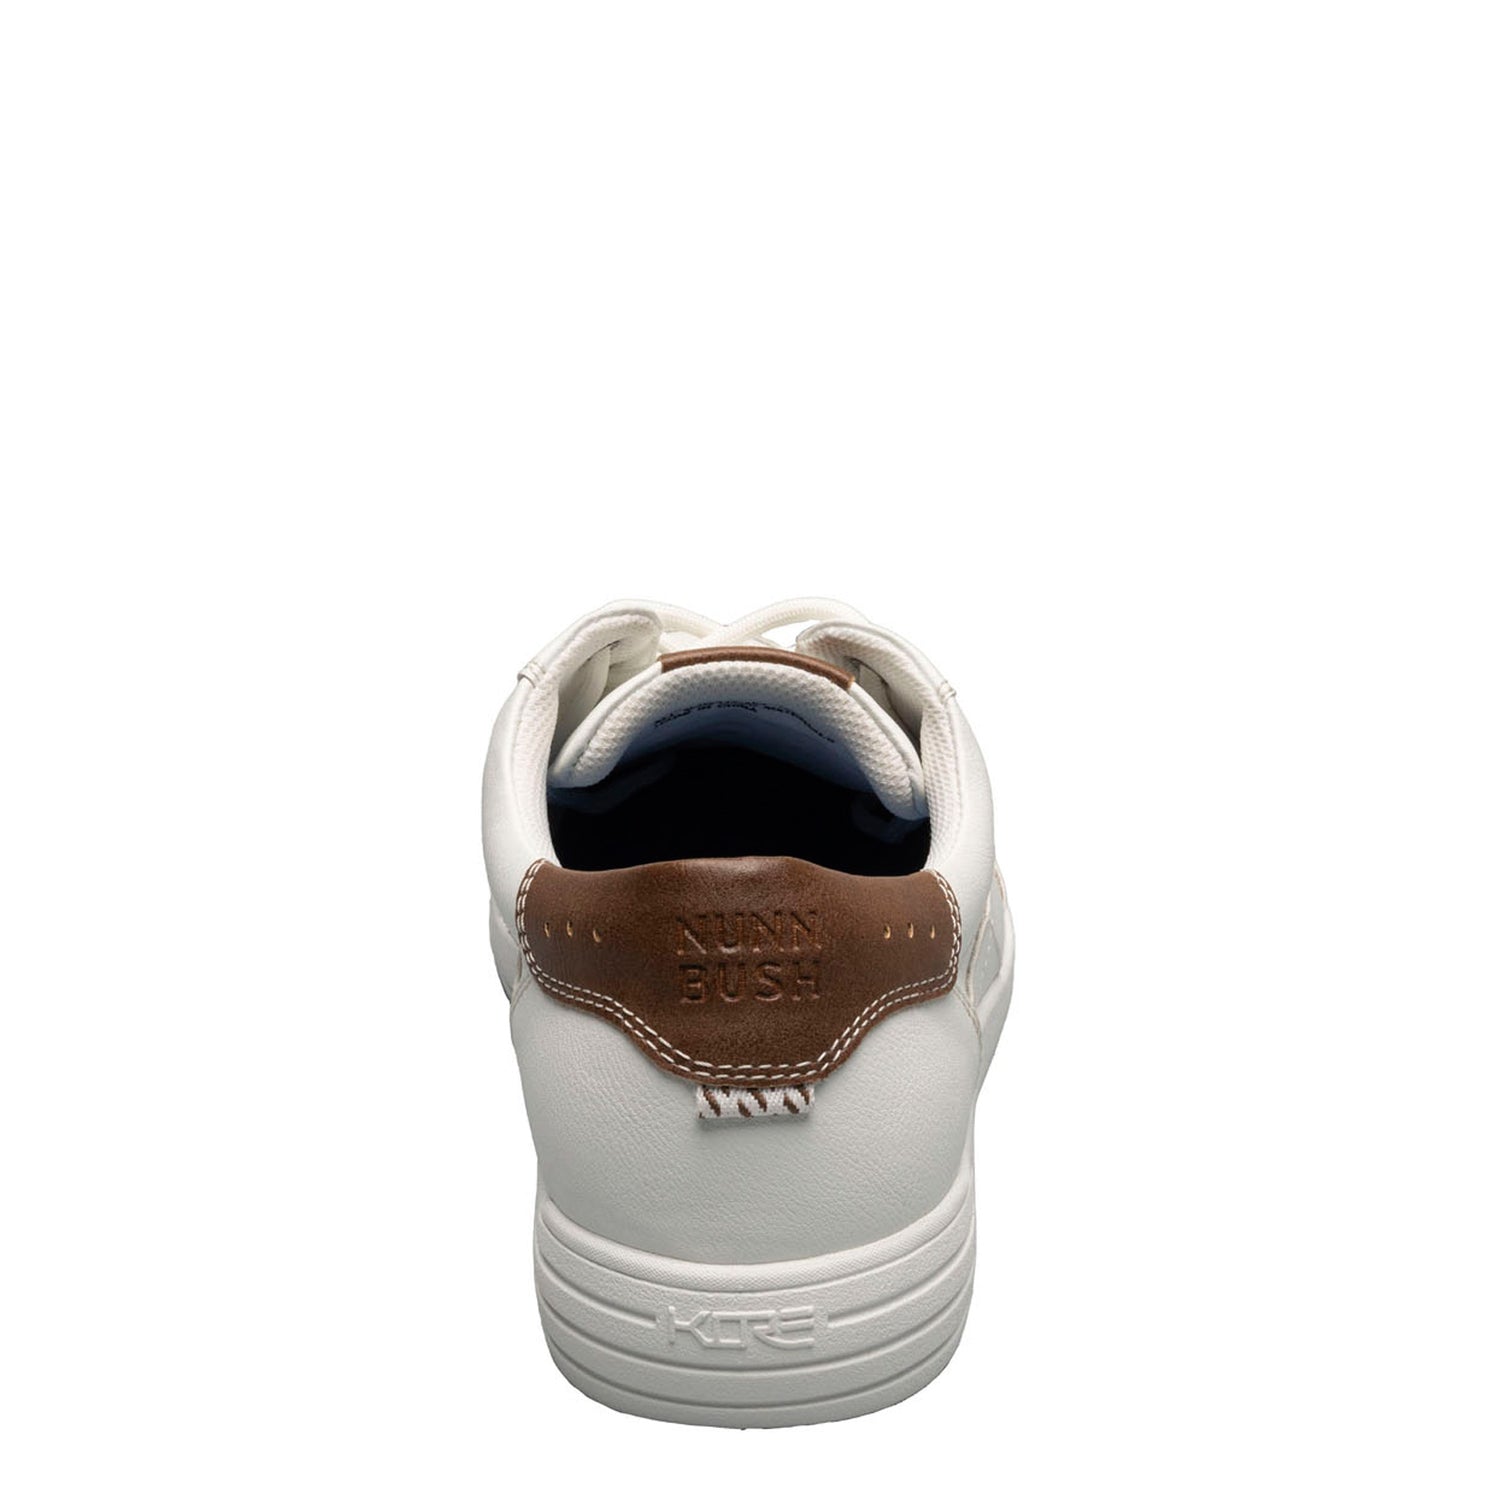 Peltz Shoes  Men's Nunn Bush Kore City Walk LTT Sneaker White 84819-100